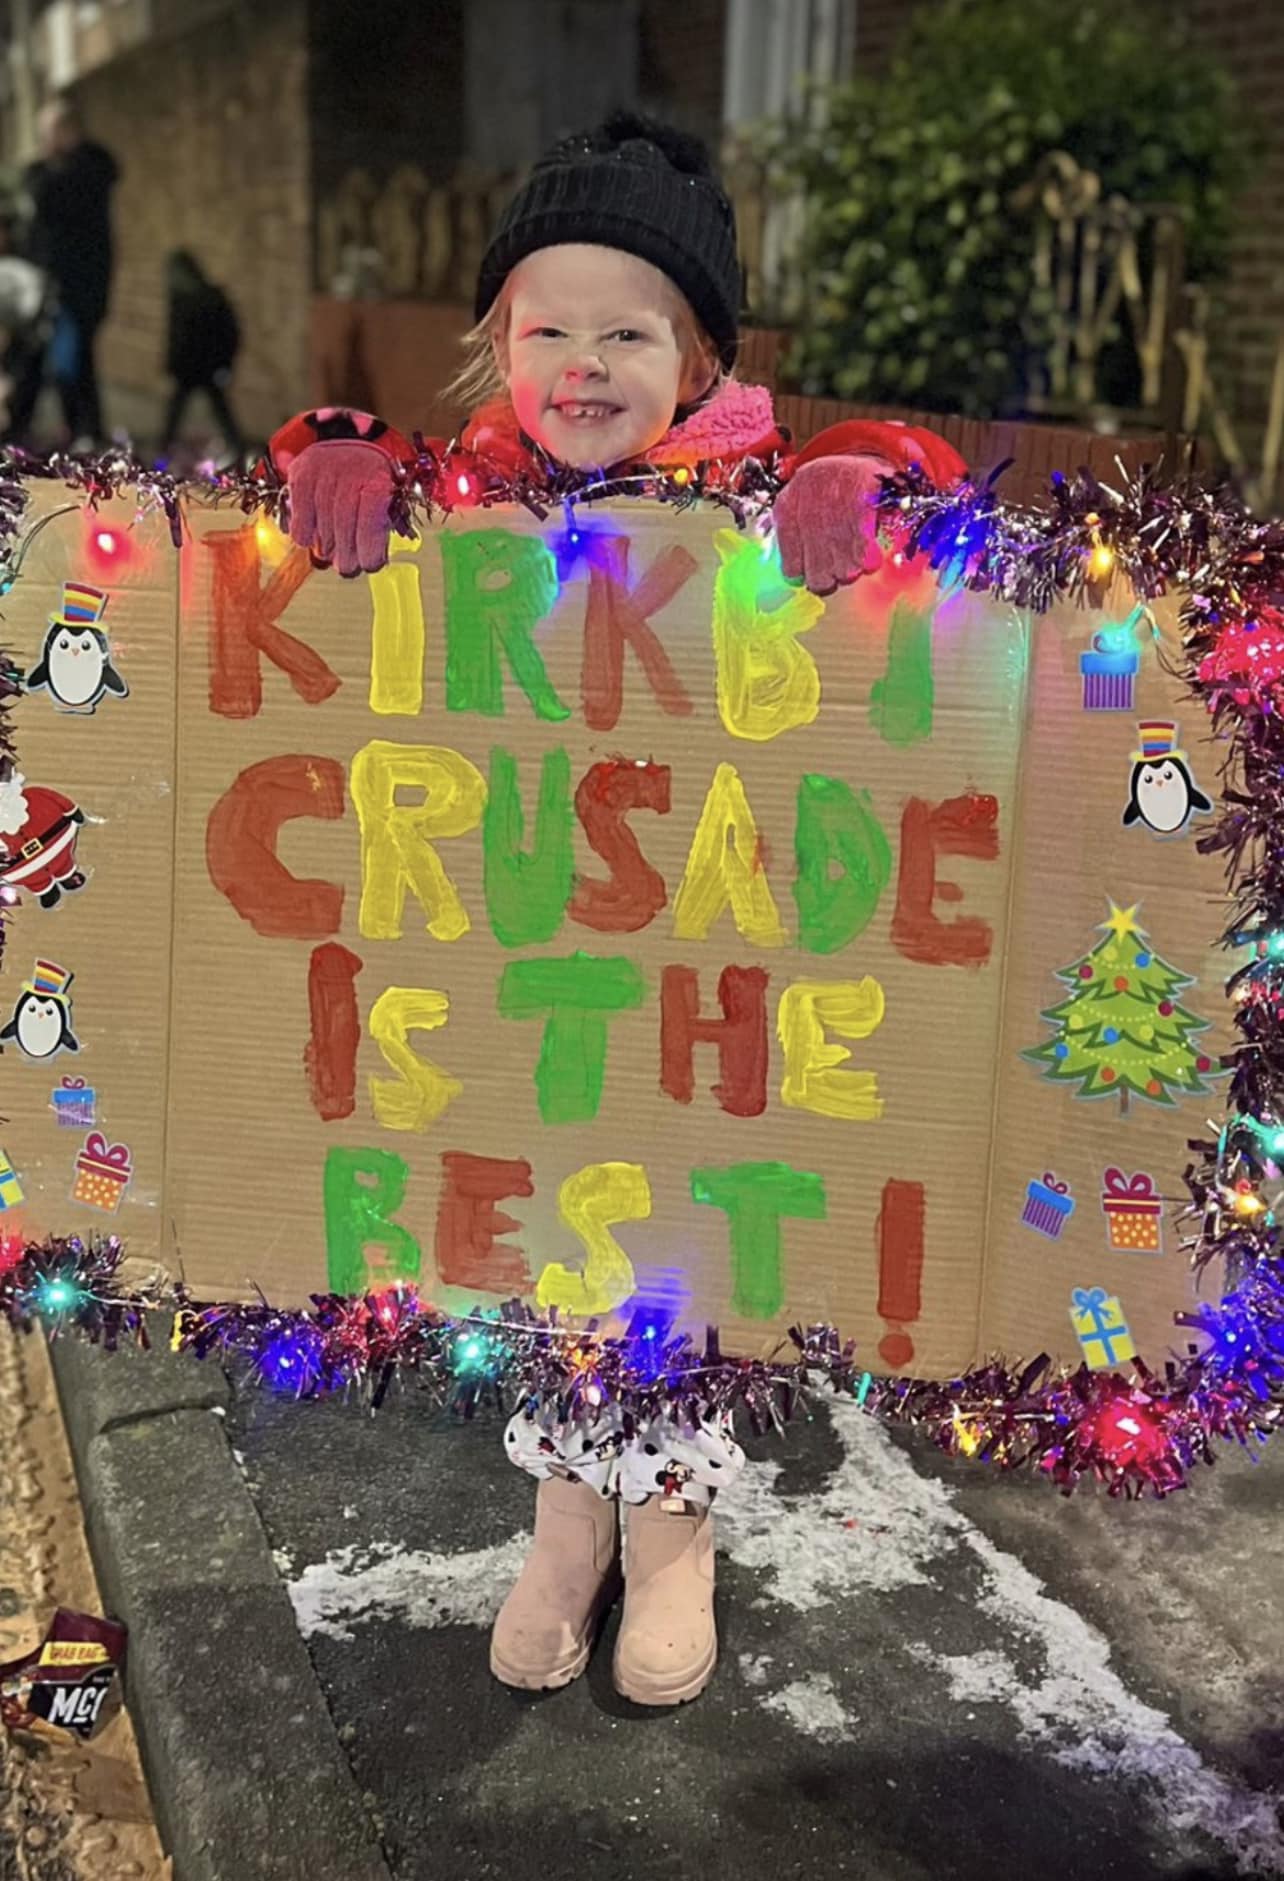 Last year's Kirkby's Christmas Crusade